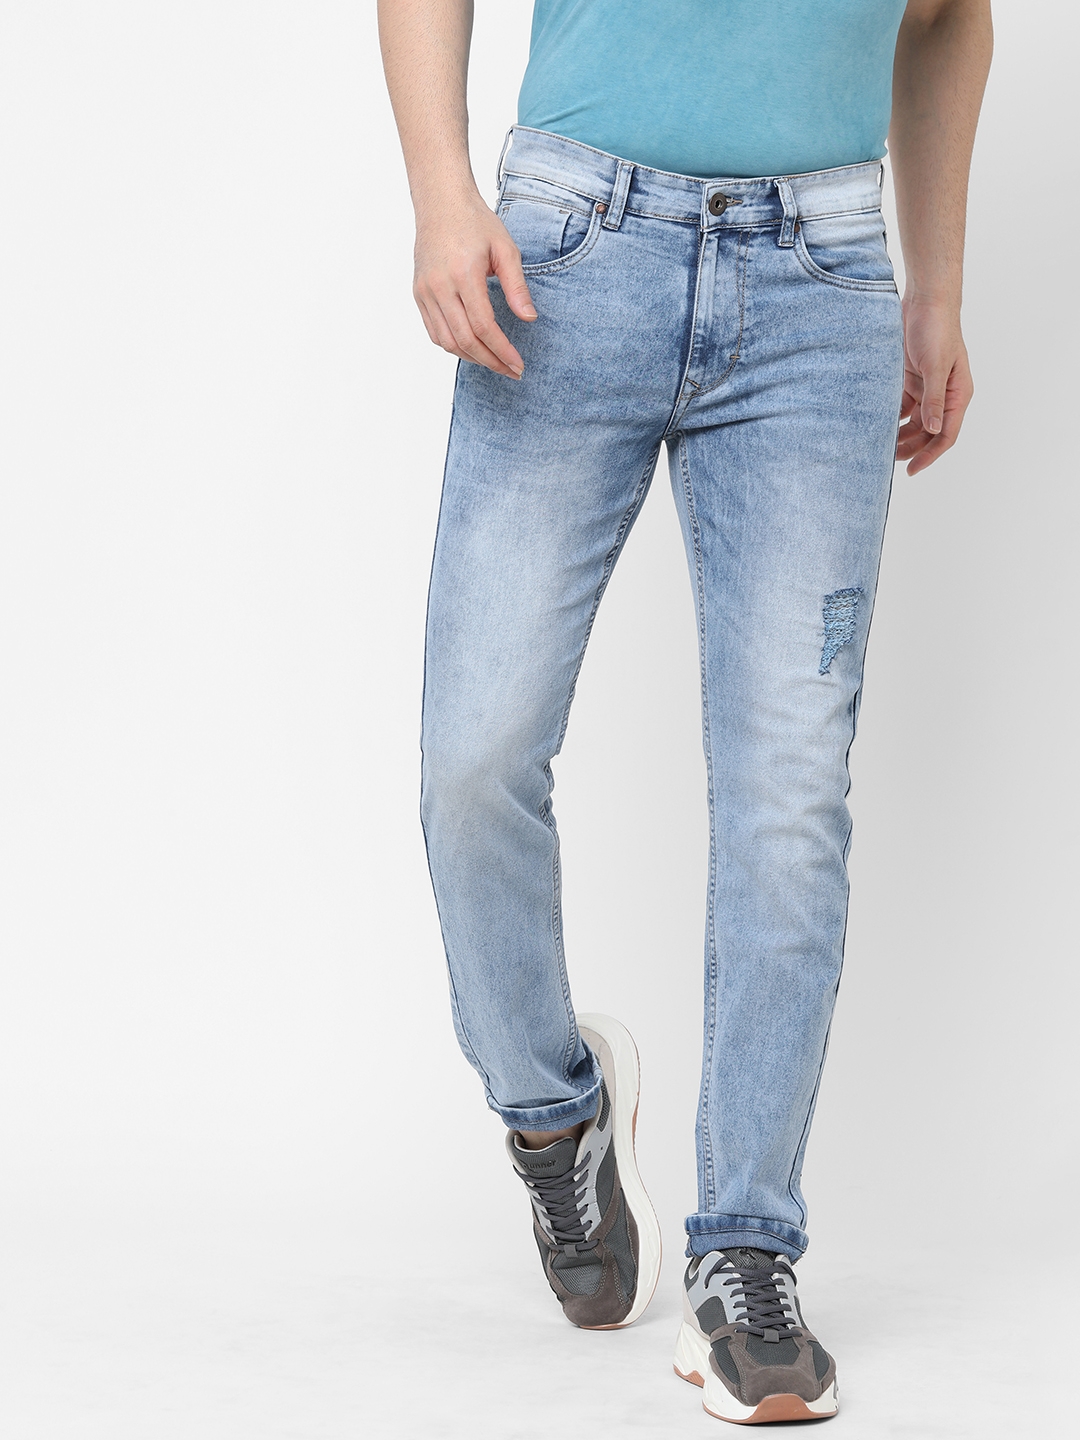 Men's Blue Cotton Ripped Jeans